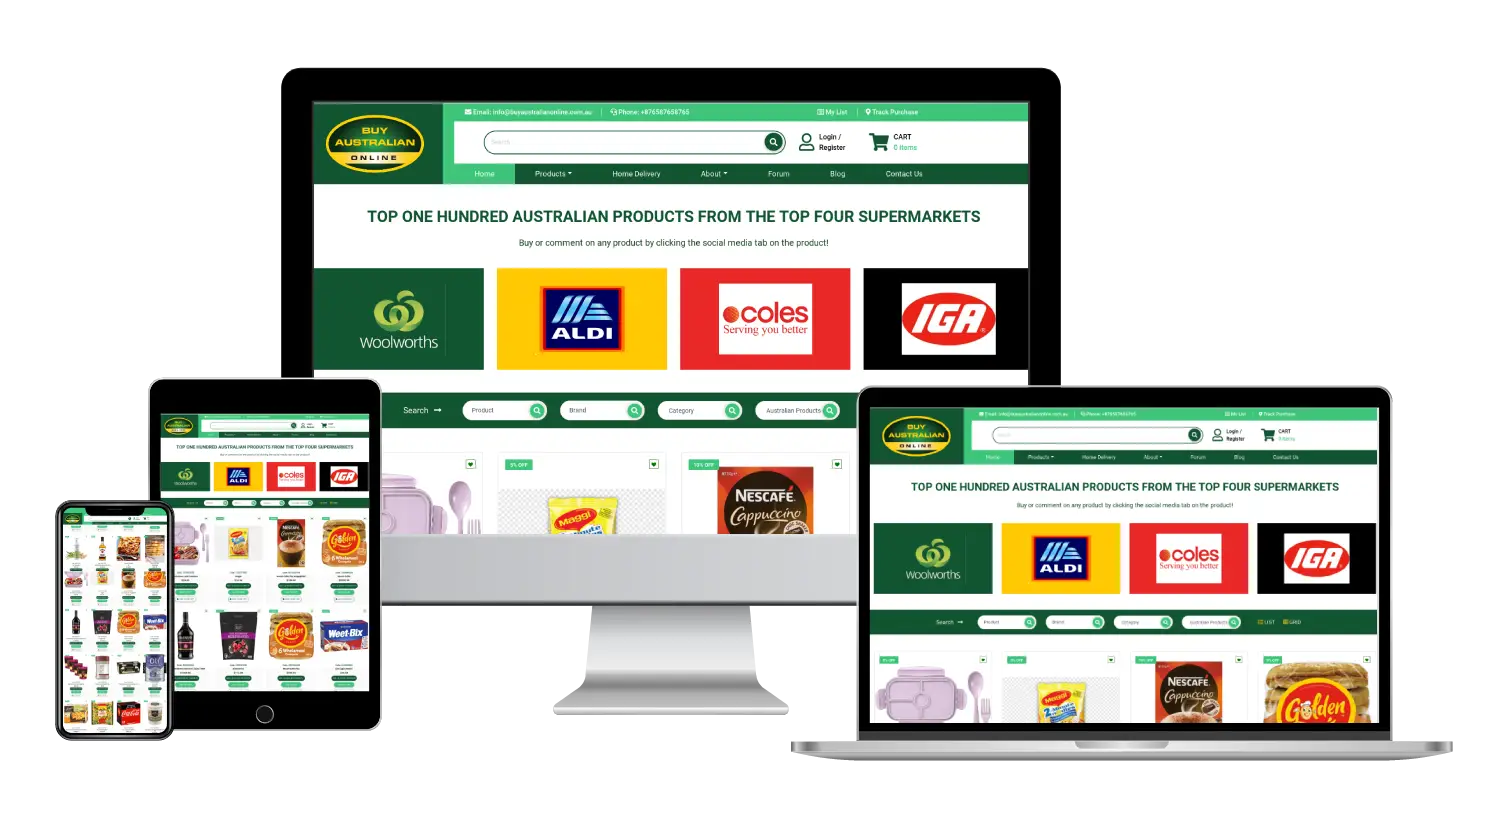 Buyaustralianonline is a online supermarket